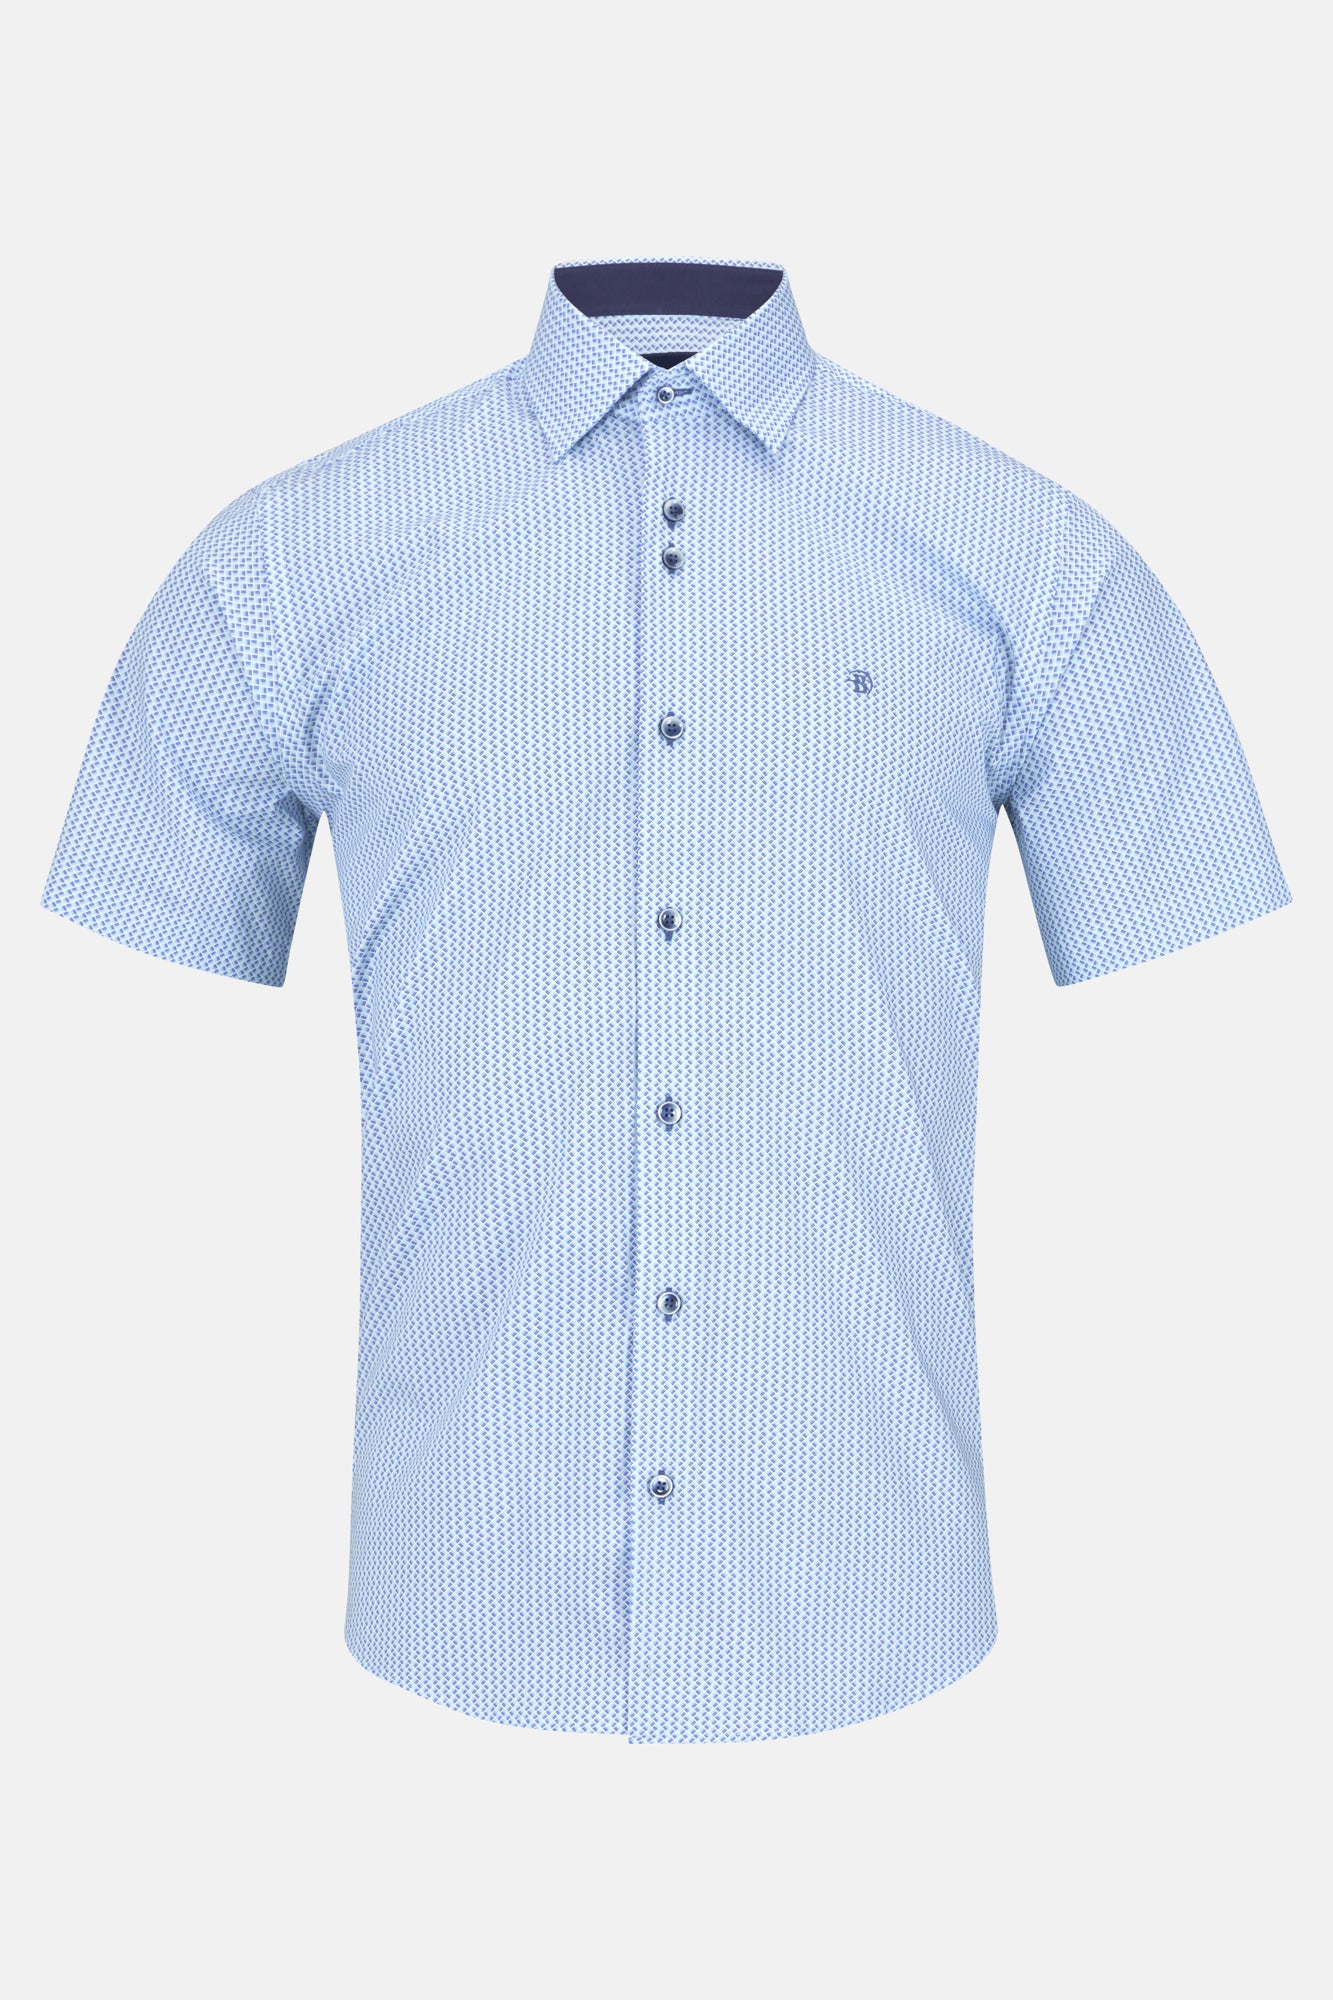 Luke Teal Short Sleeved Shirt by Benetti Menswear 